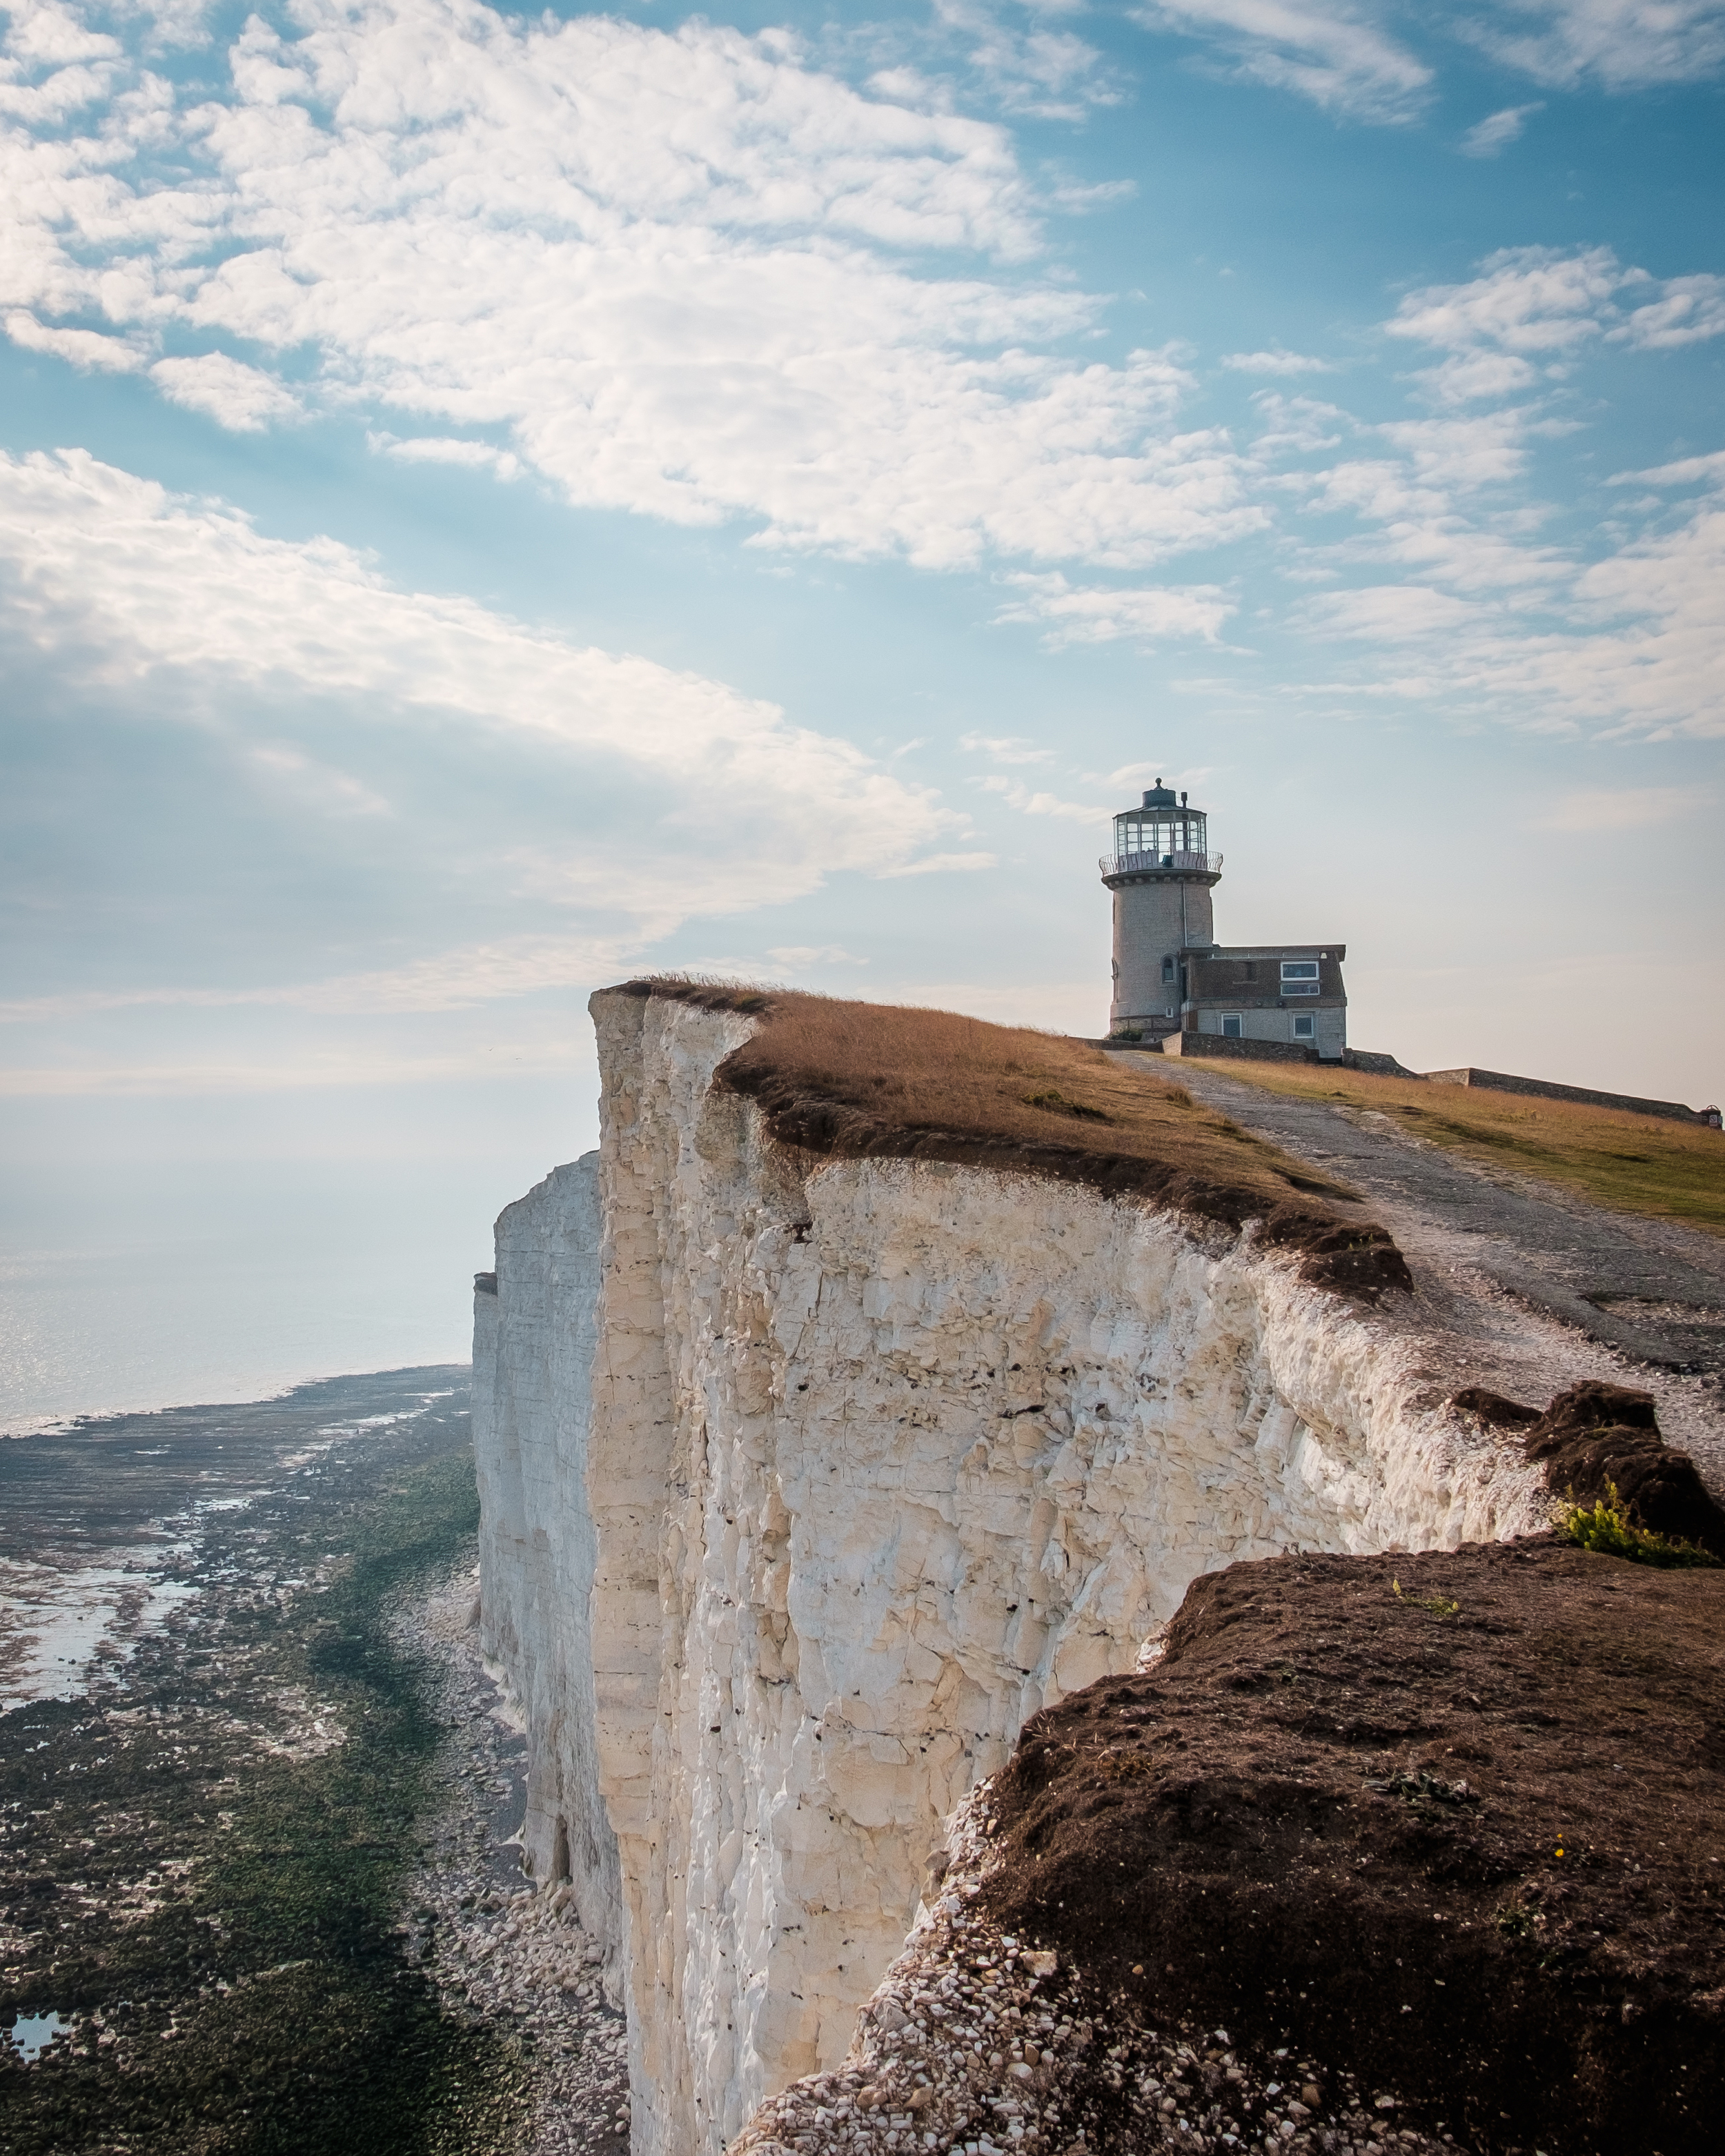 Belle Tout Lighthouse with chalk cliffs